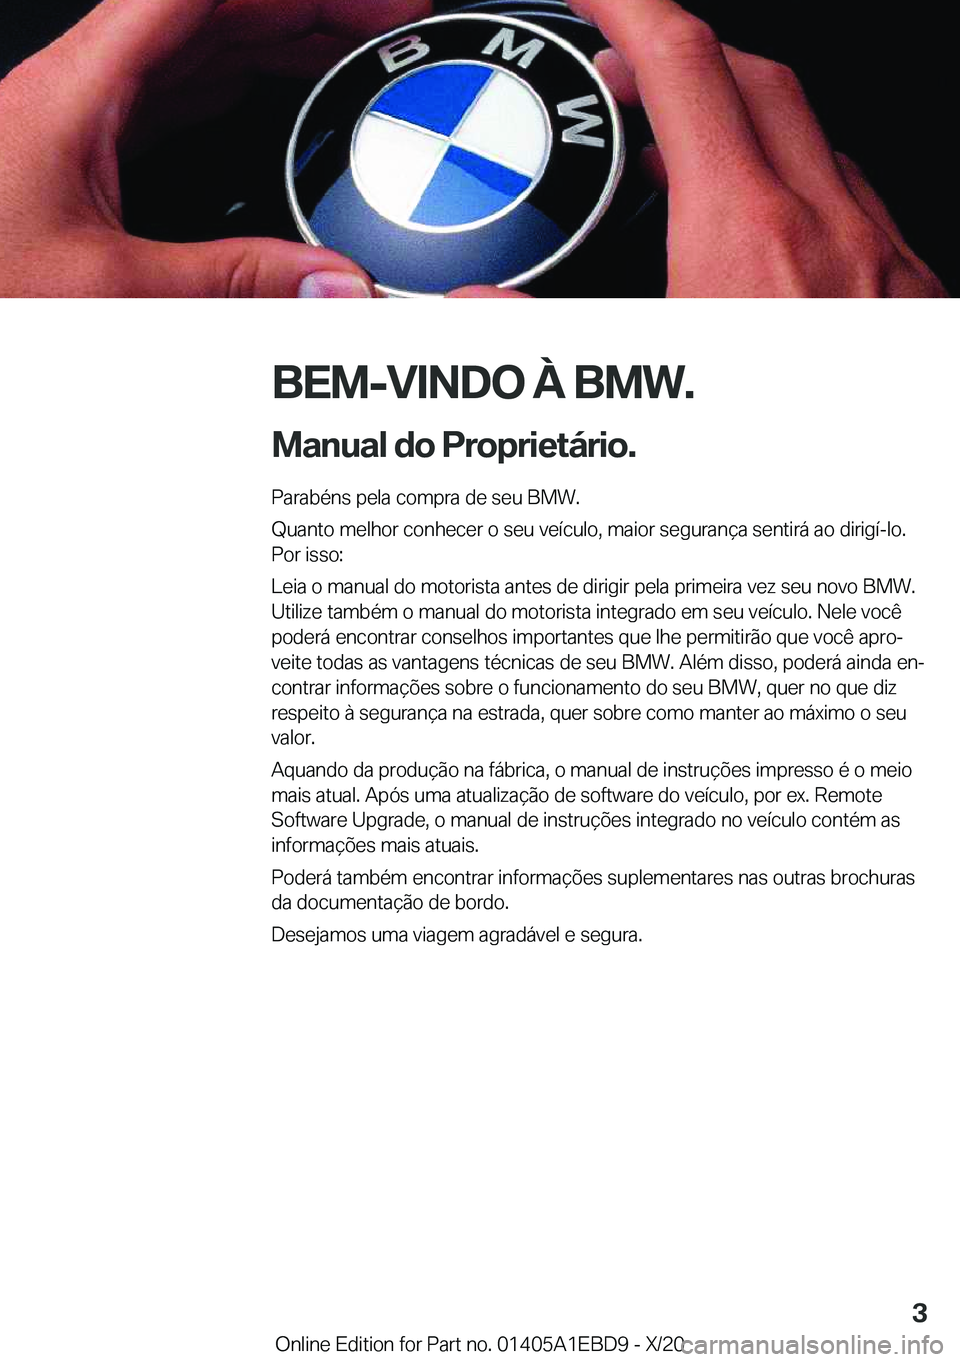 BMW 3 SERIES 2021  Manual do condutor (in Portuguese) �B�E�M�-�V�I�N�D�O��À��B�M�W�.
�M�a�n�u�a�l��d�o��P�r�o�p�r�i�e�t�á�r�i�o�. �P�a�r�a�b�é�n�s��p�e�l�a��c�o�m�p�r�a��d�e��s�e�u��B�M�W�.
�Q�u�a�n�t�o��m�e�l�h�o�r��c�o�n�h�e�c�e�r��o��s